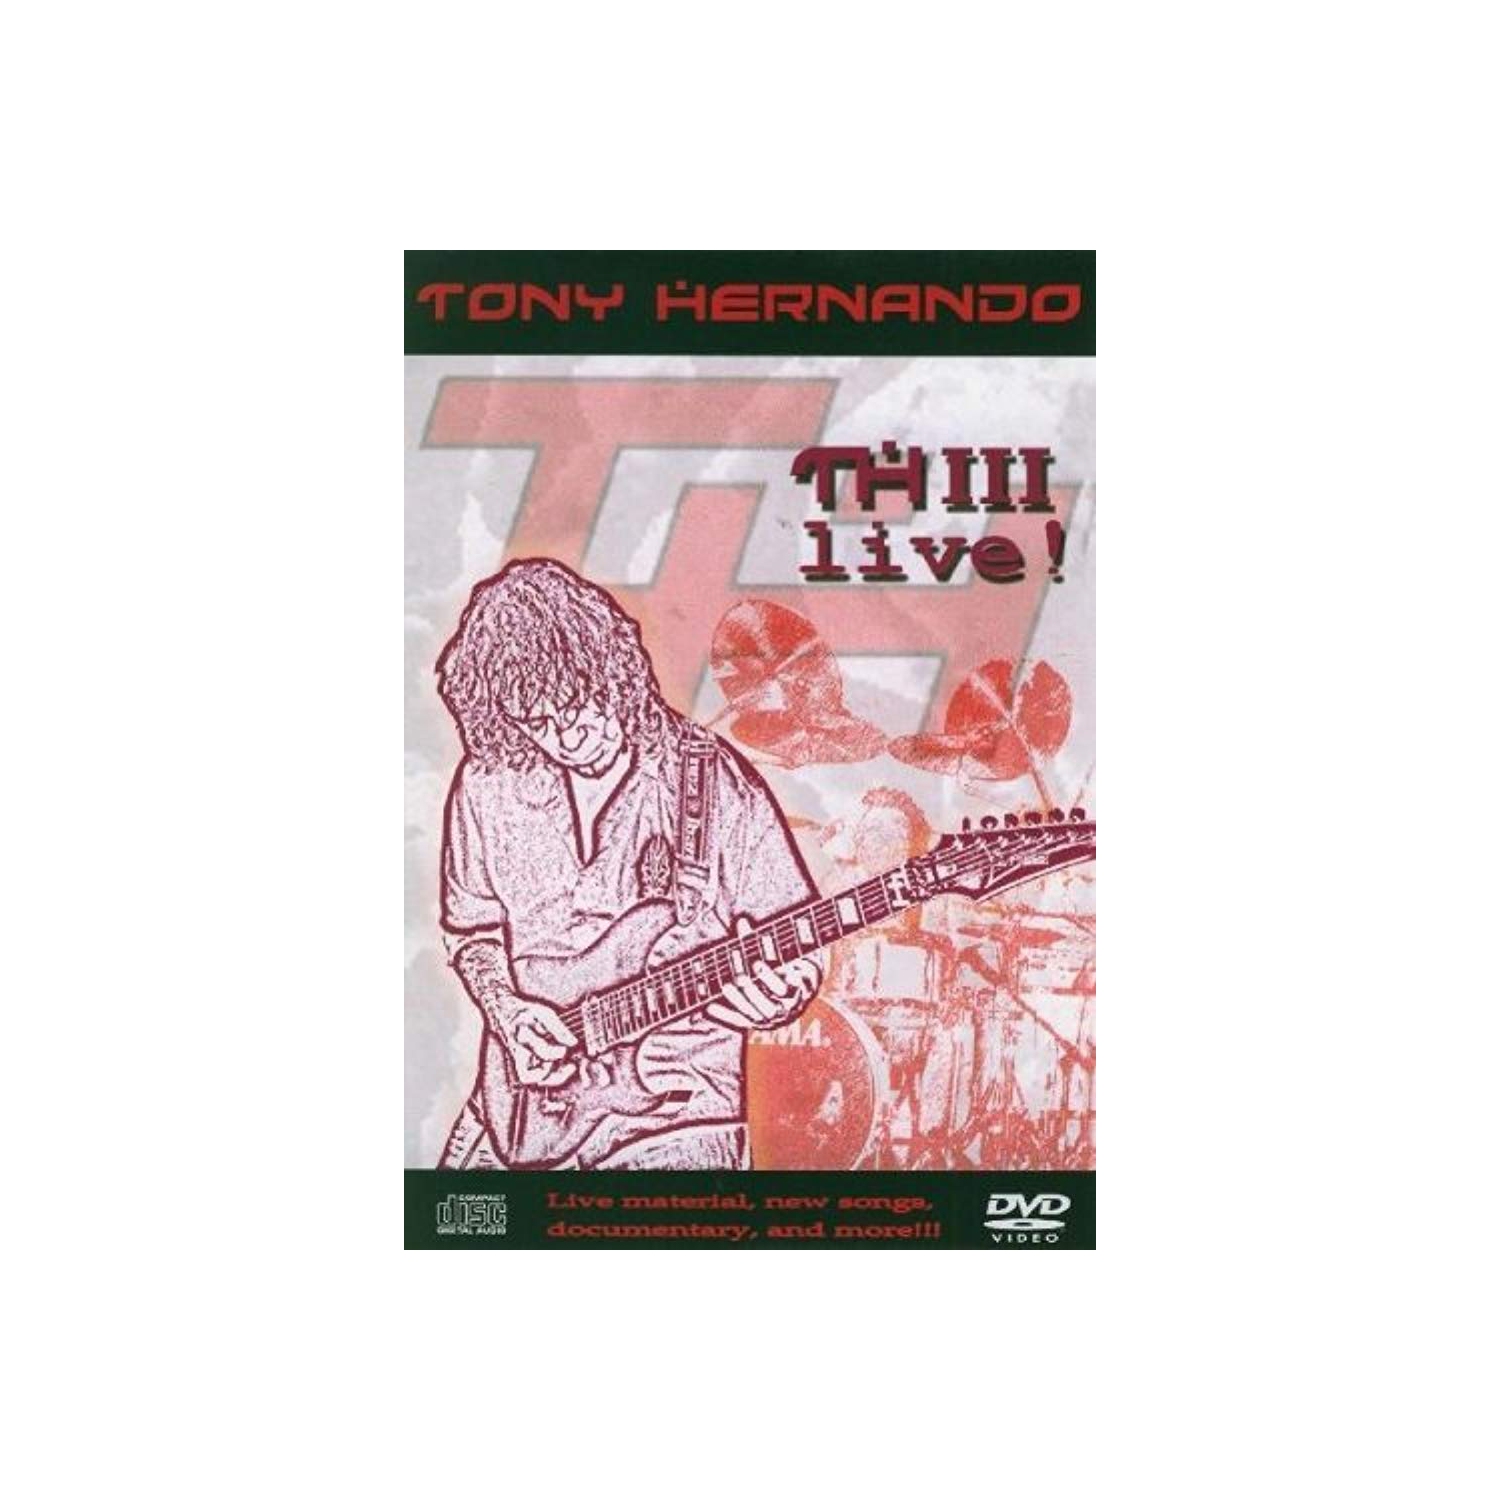 TH III Live [Audio CD] Hernando, Tony